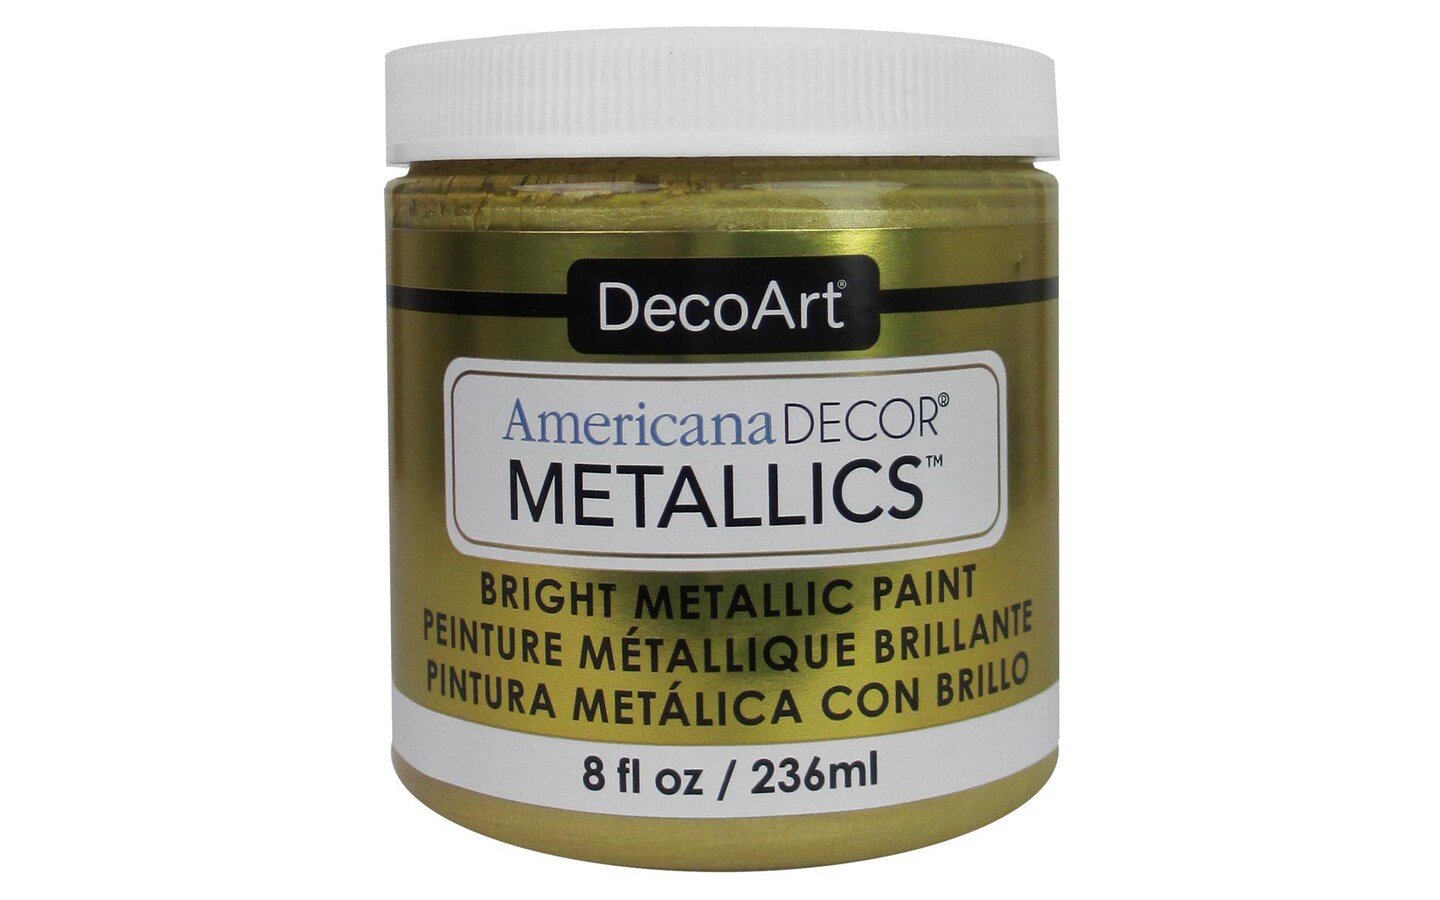 DecoArt Americana Decor Metallics Craft Paint, Old Gold, 8-oz.